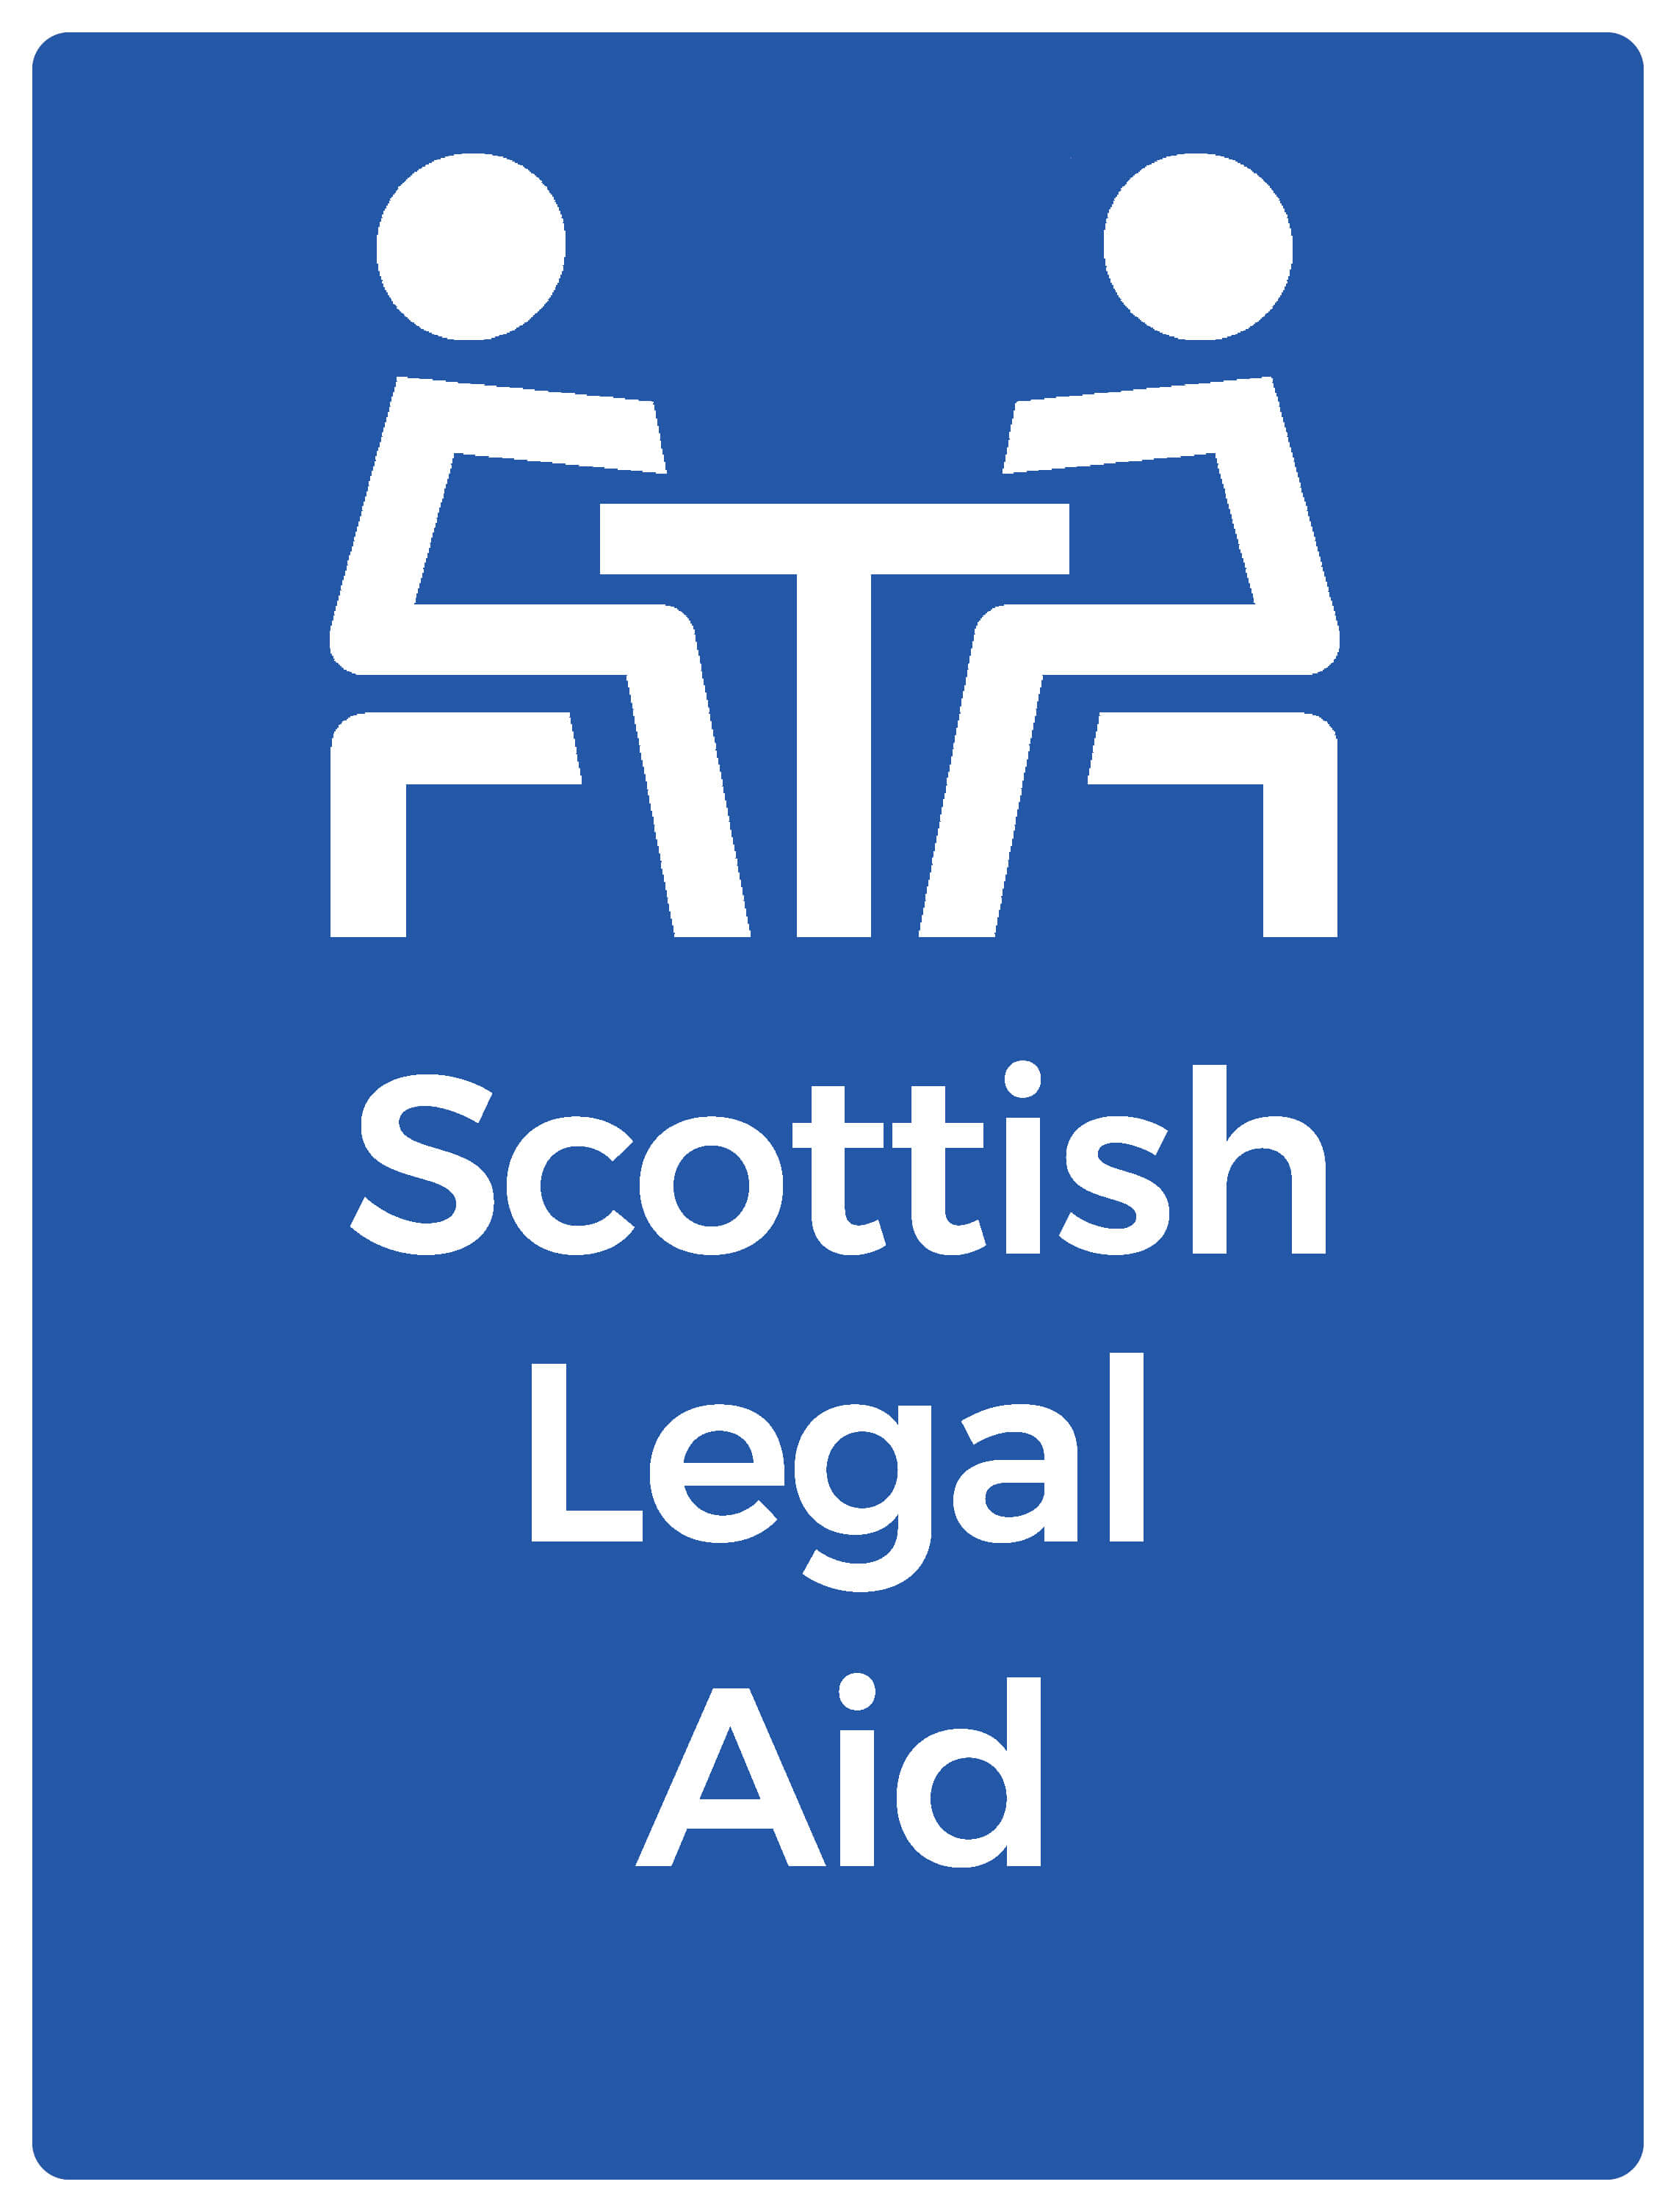 LKW Solicitors Scottish legal aid provider Glasgow